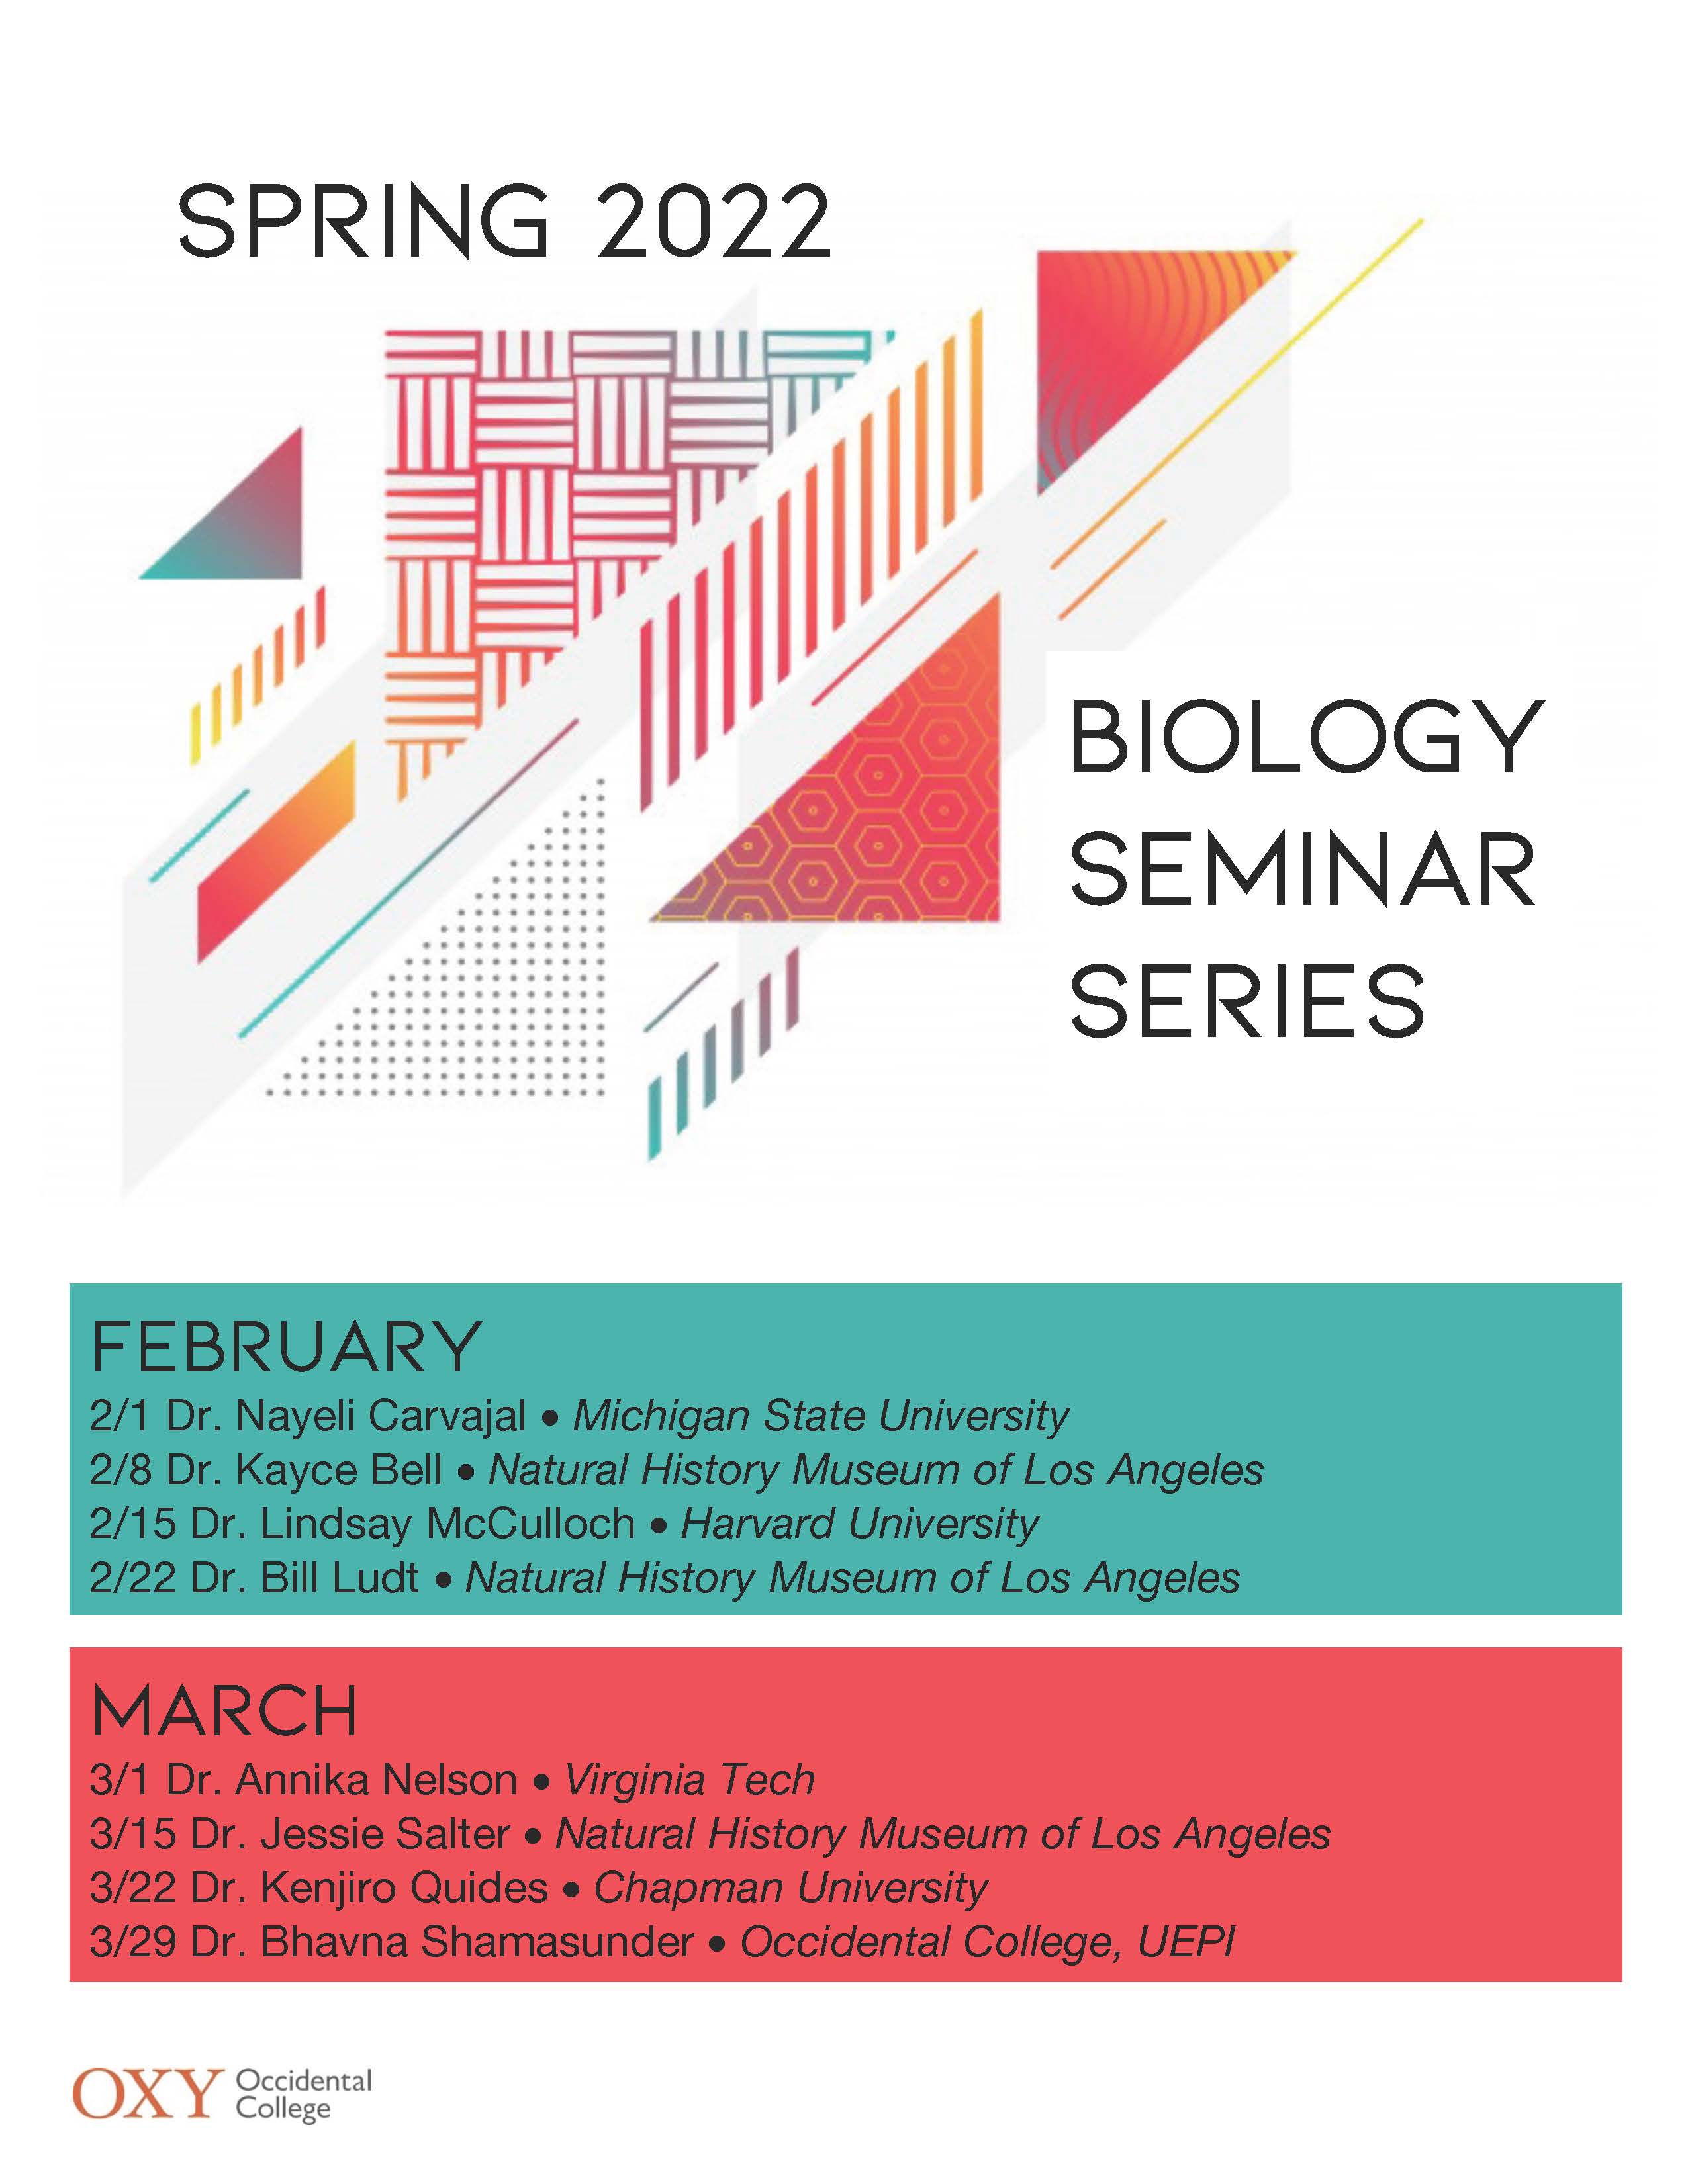 Spring 2022 Biology Seminar Series Schedule